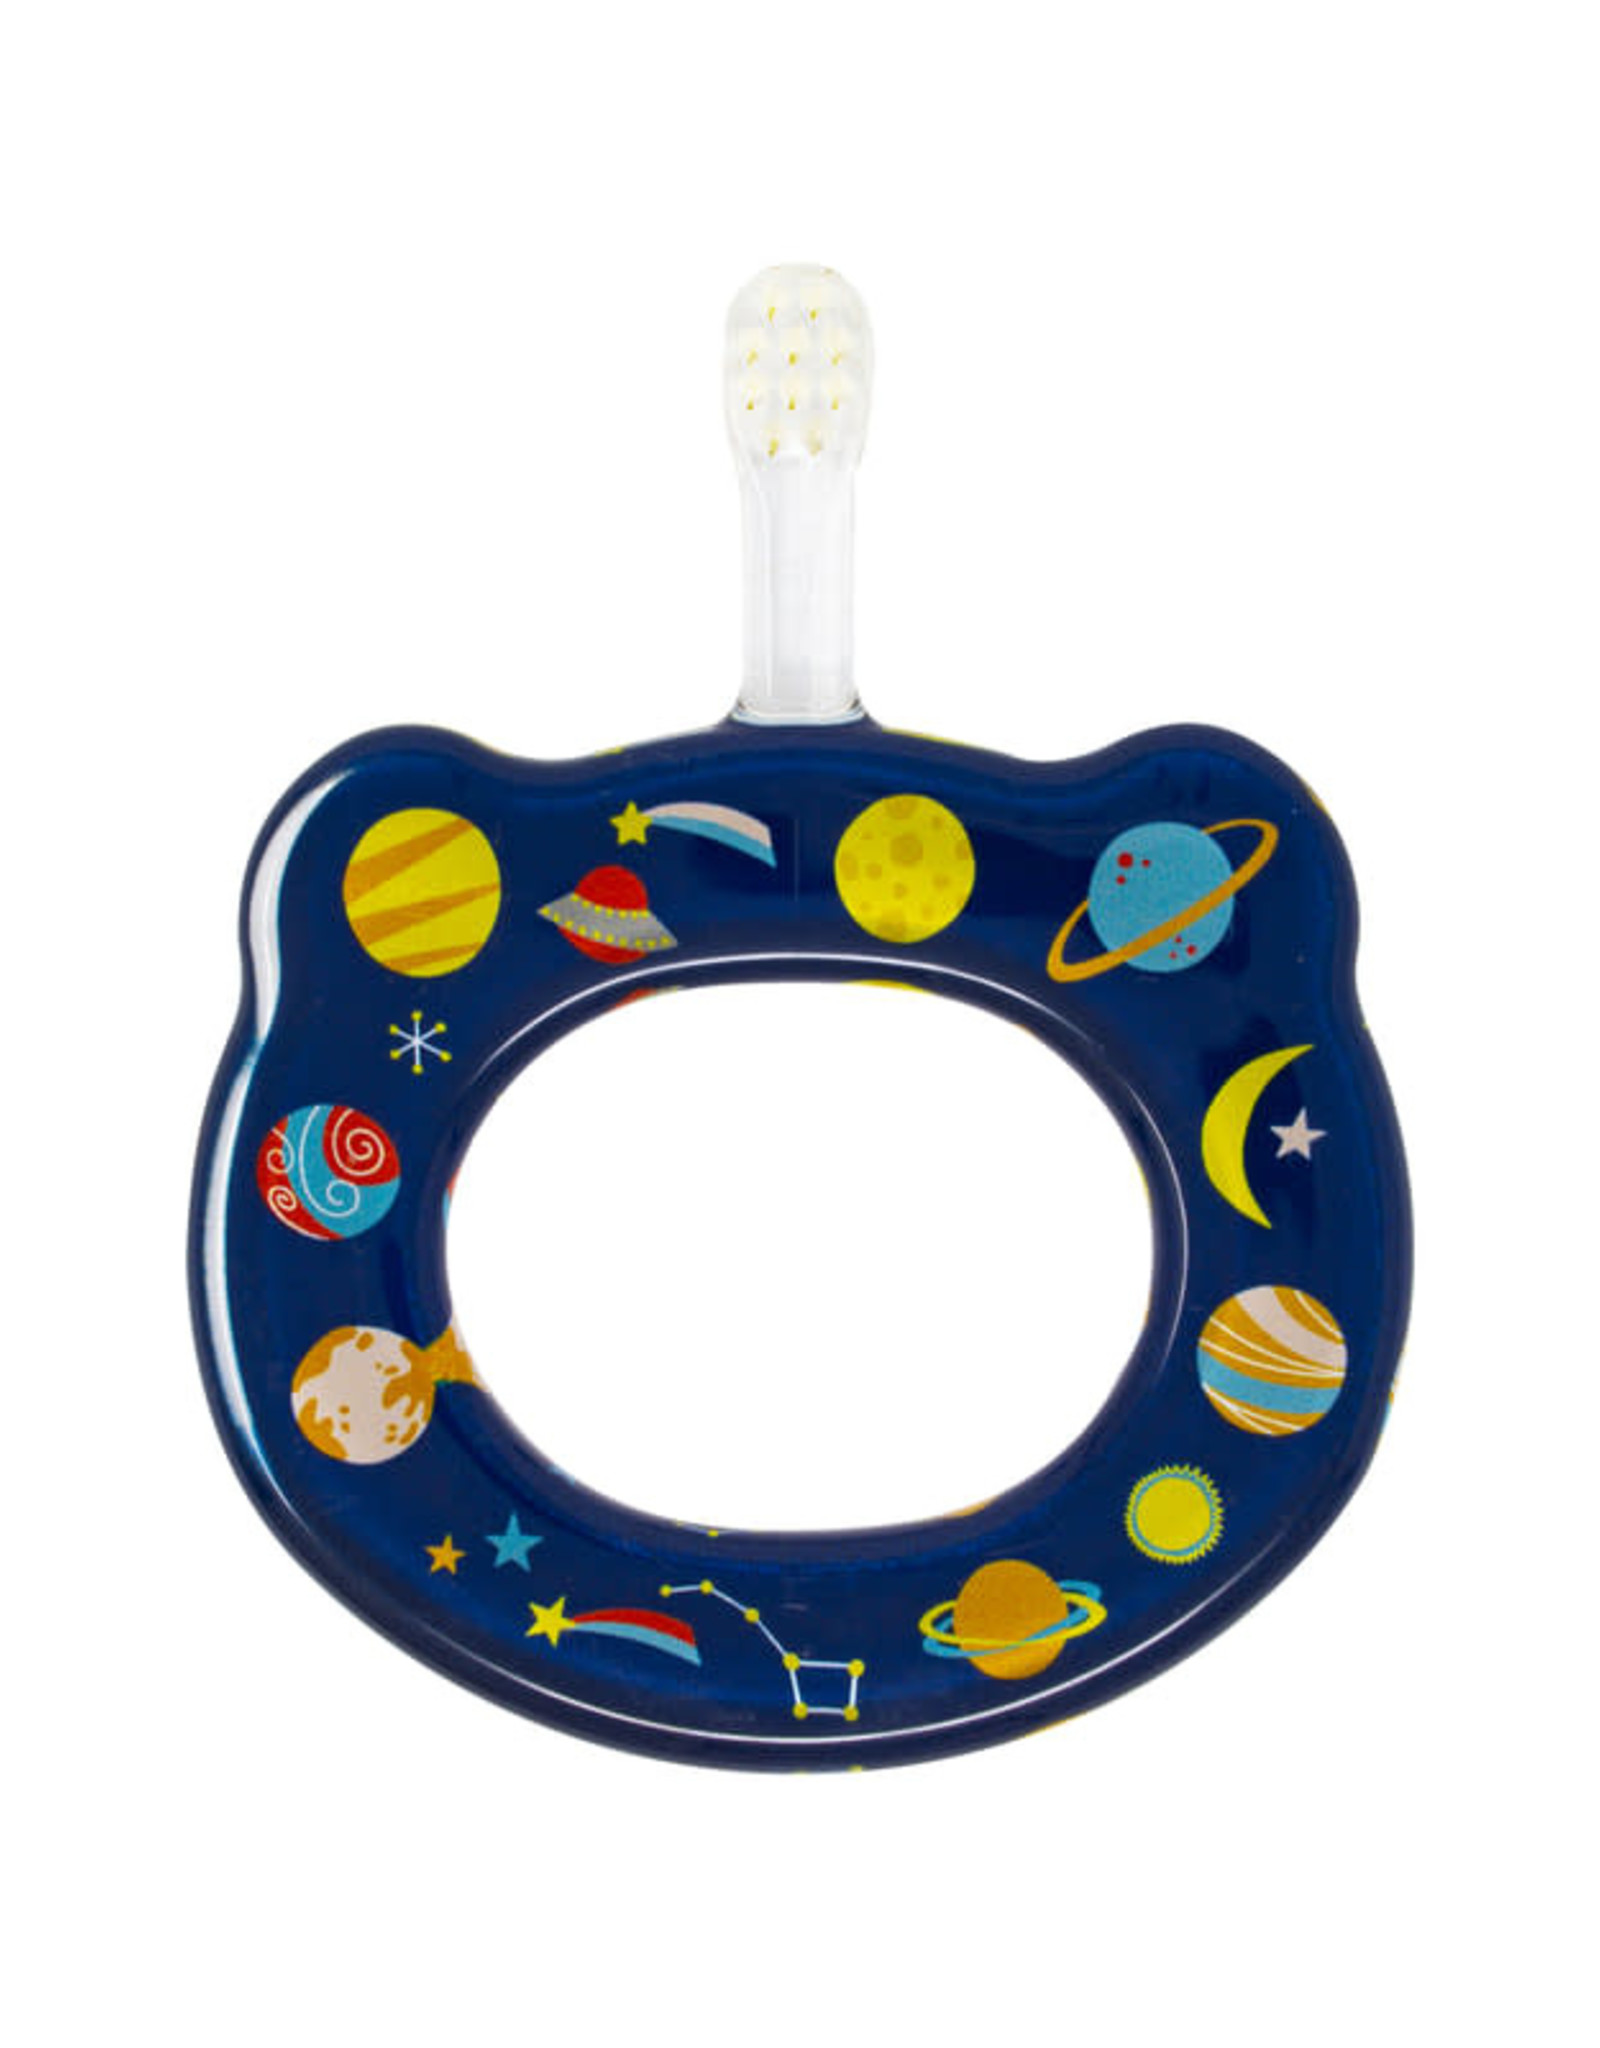 Artis Space HAMICO Baby Toothbrush